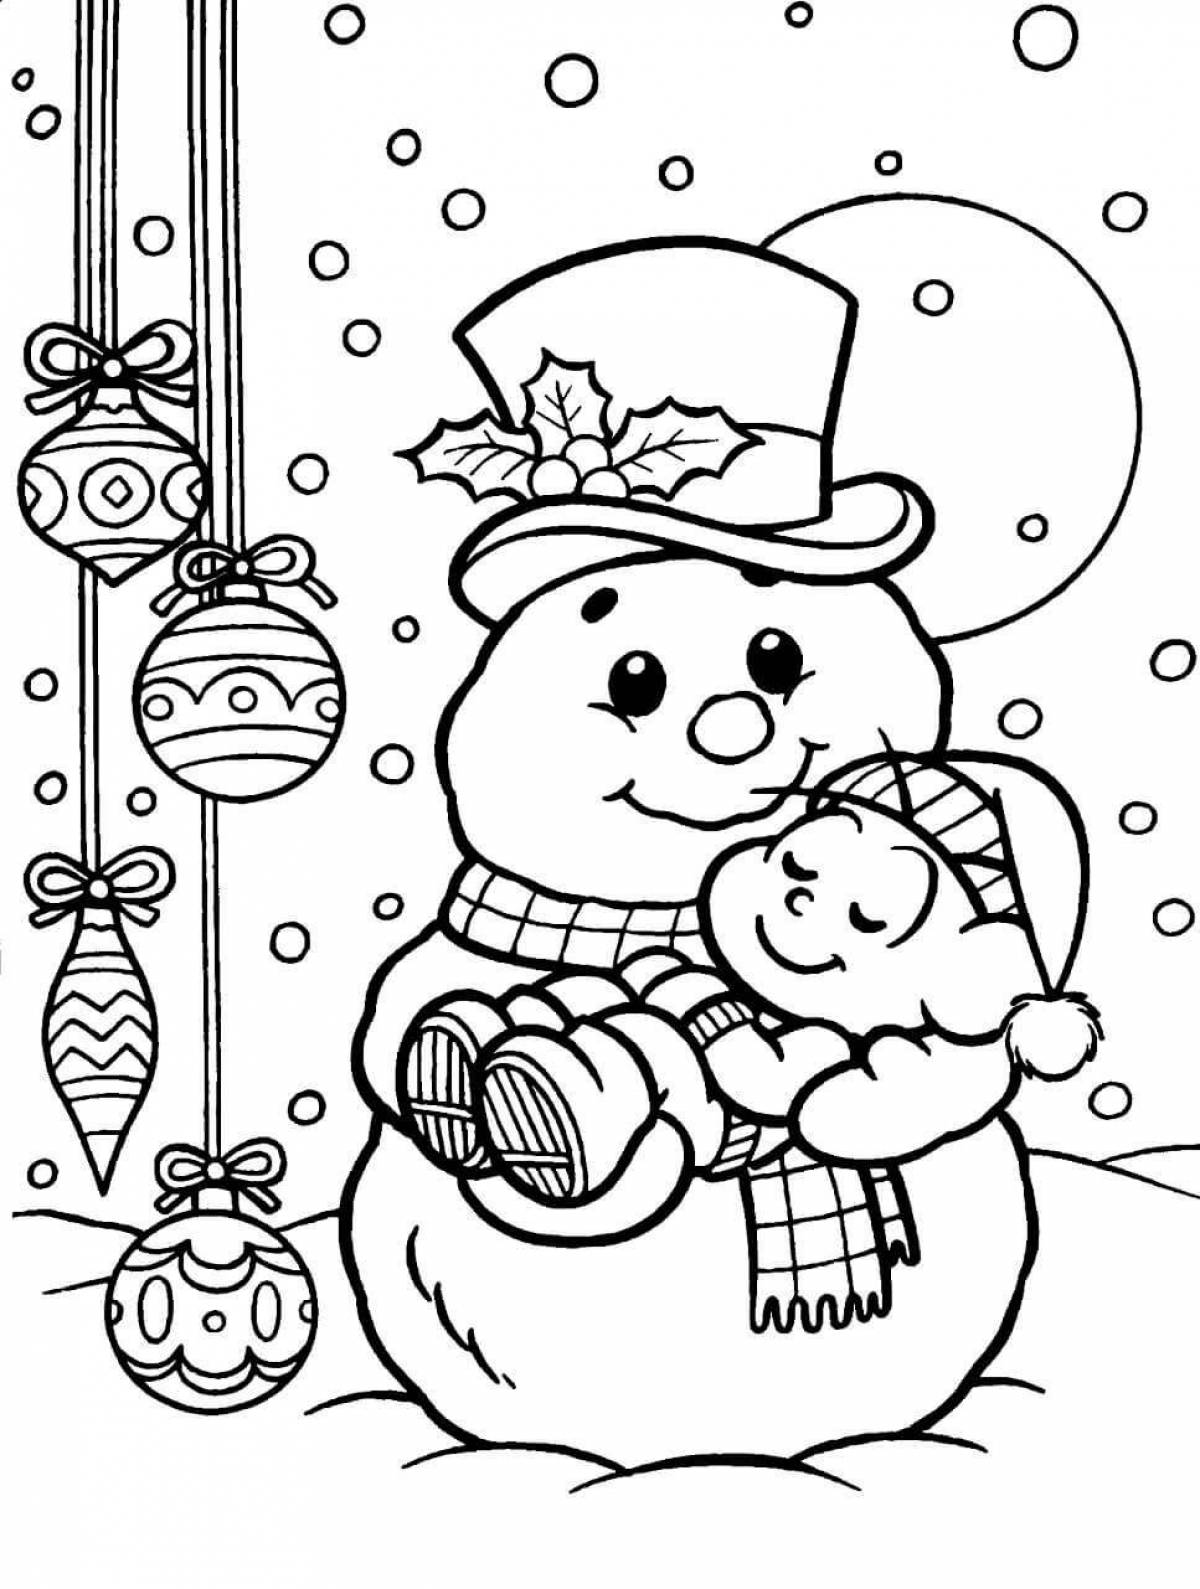 Magic snowman drawing